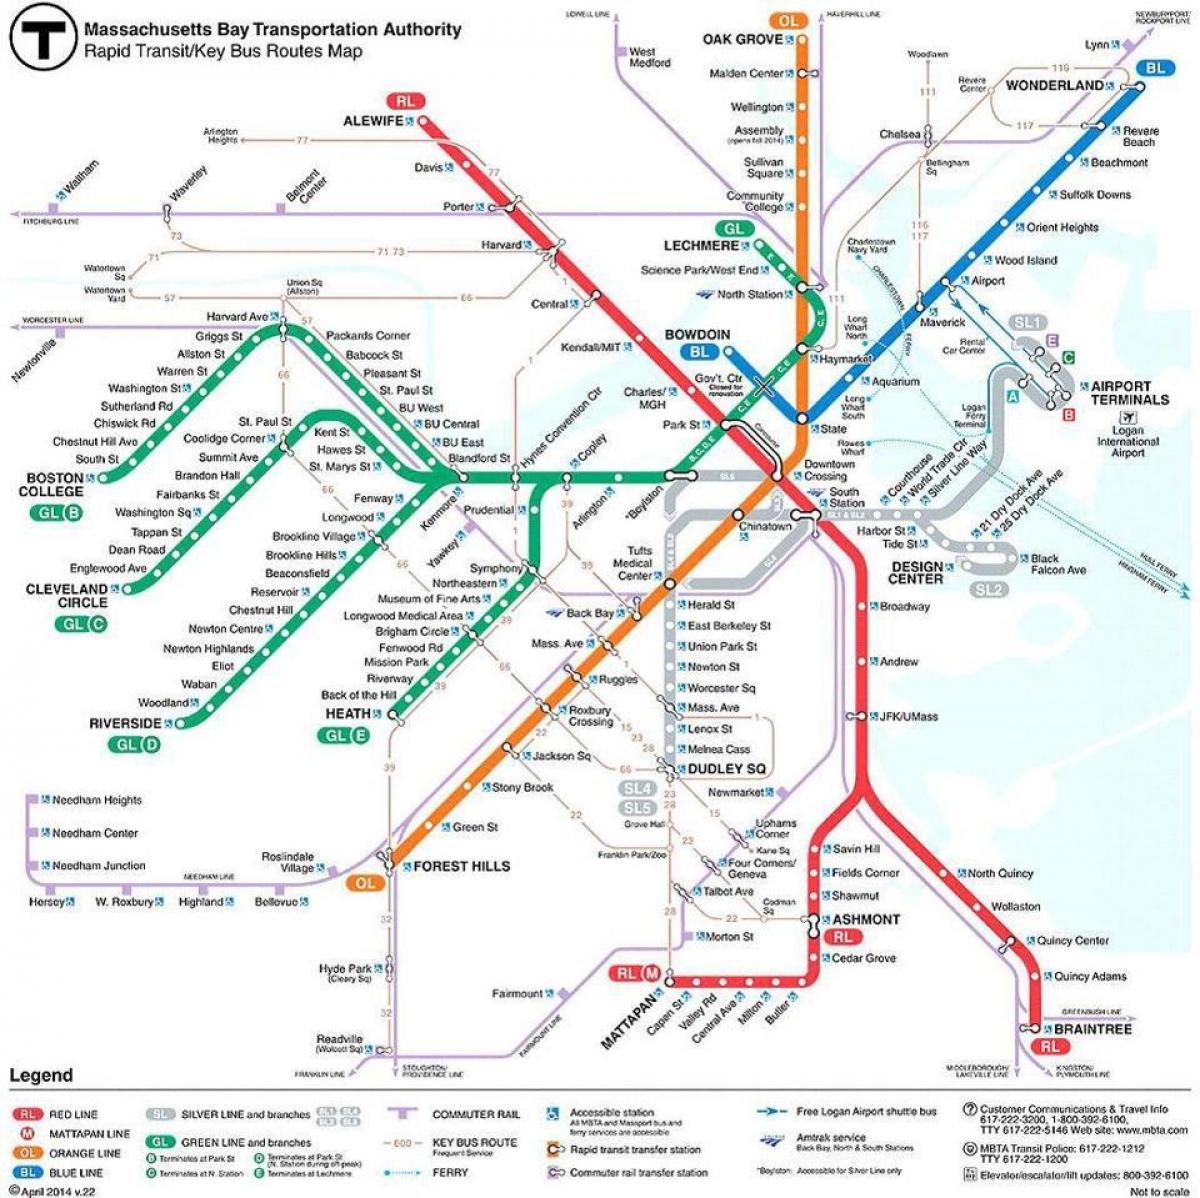 MBTA Boston zemljevid